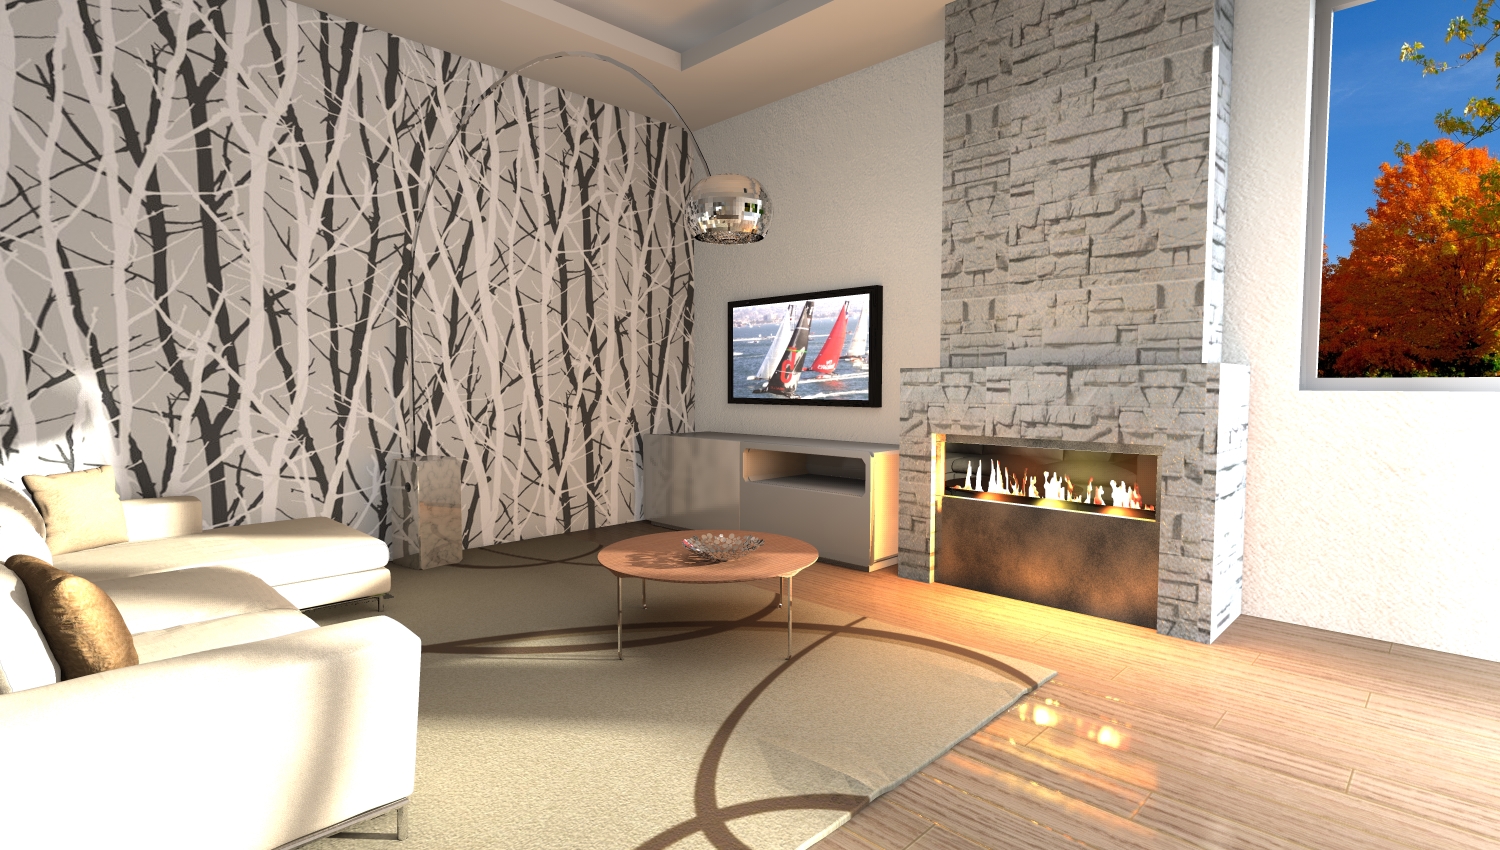 Interior design progetto arredamento casa for Esempi arredamento